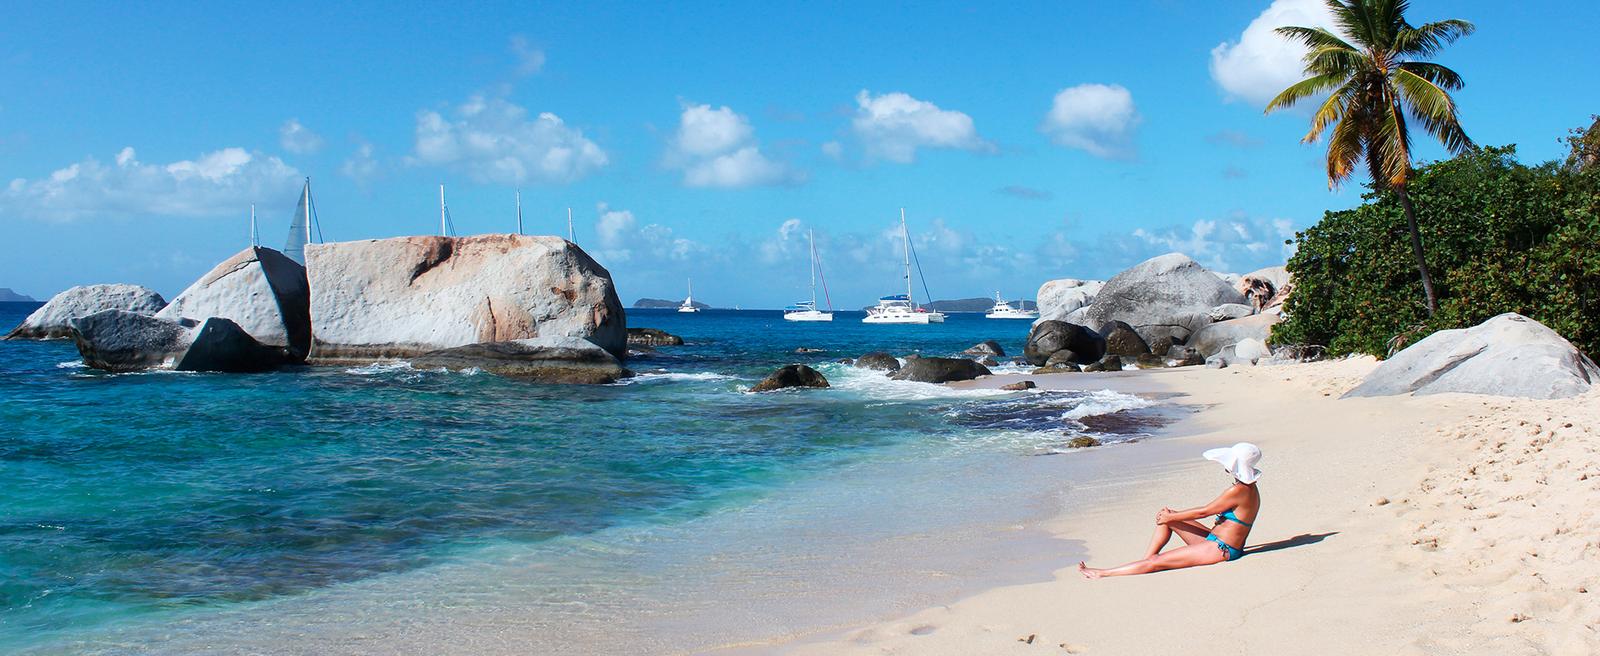 One World Trips - Marine - Sailing - British Virgin Islands